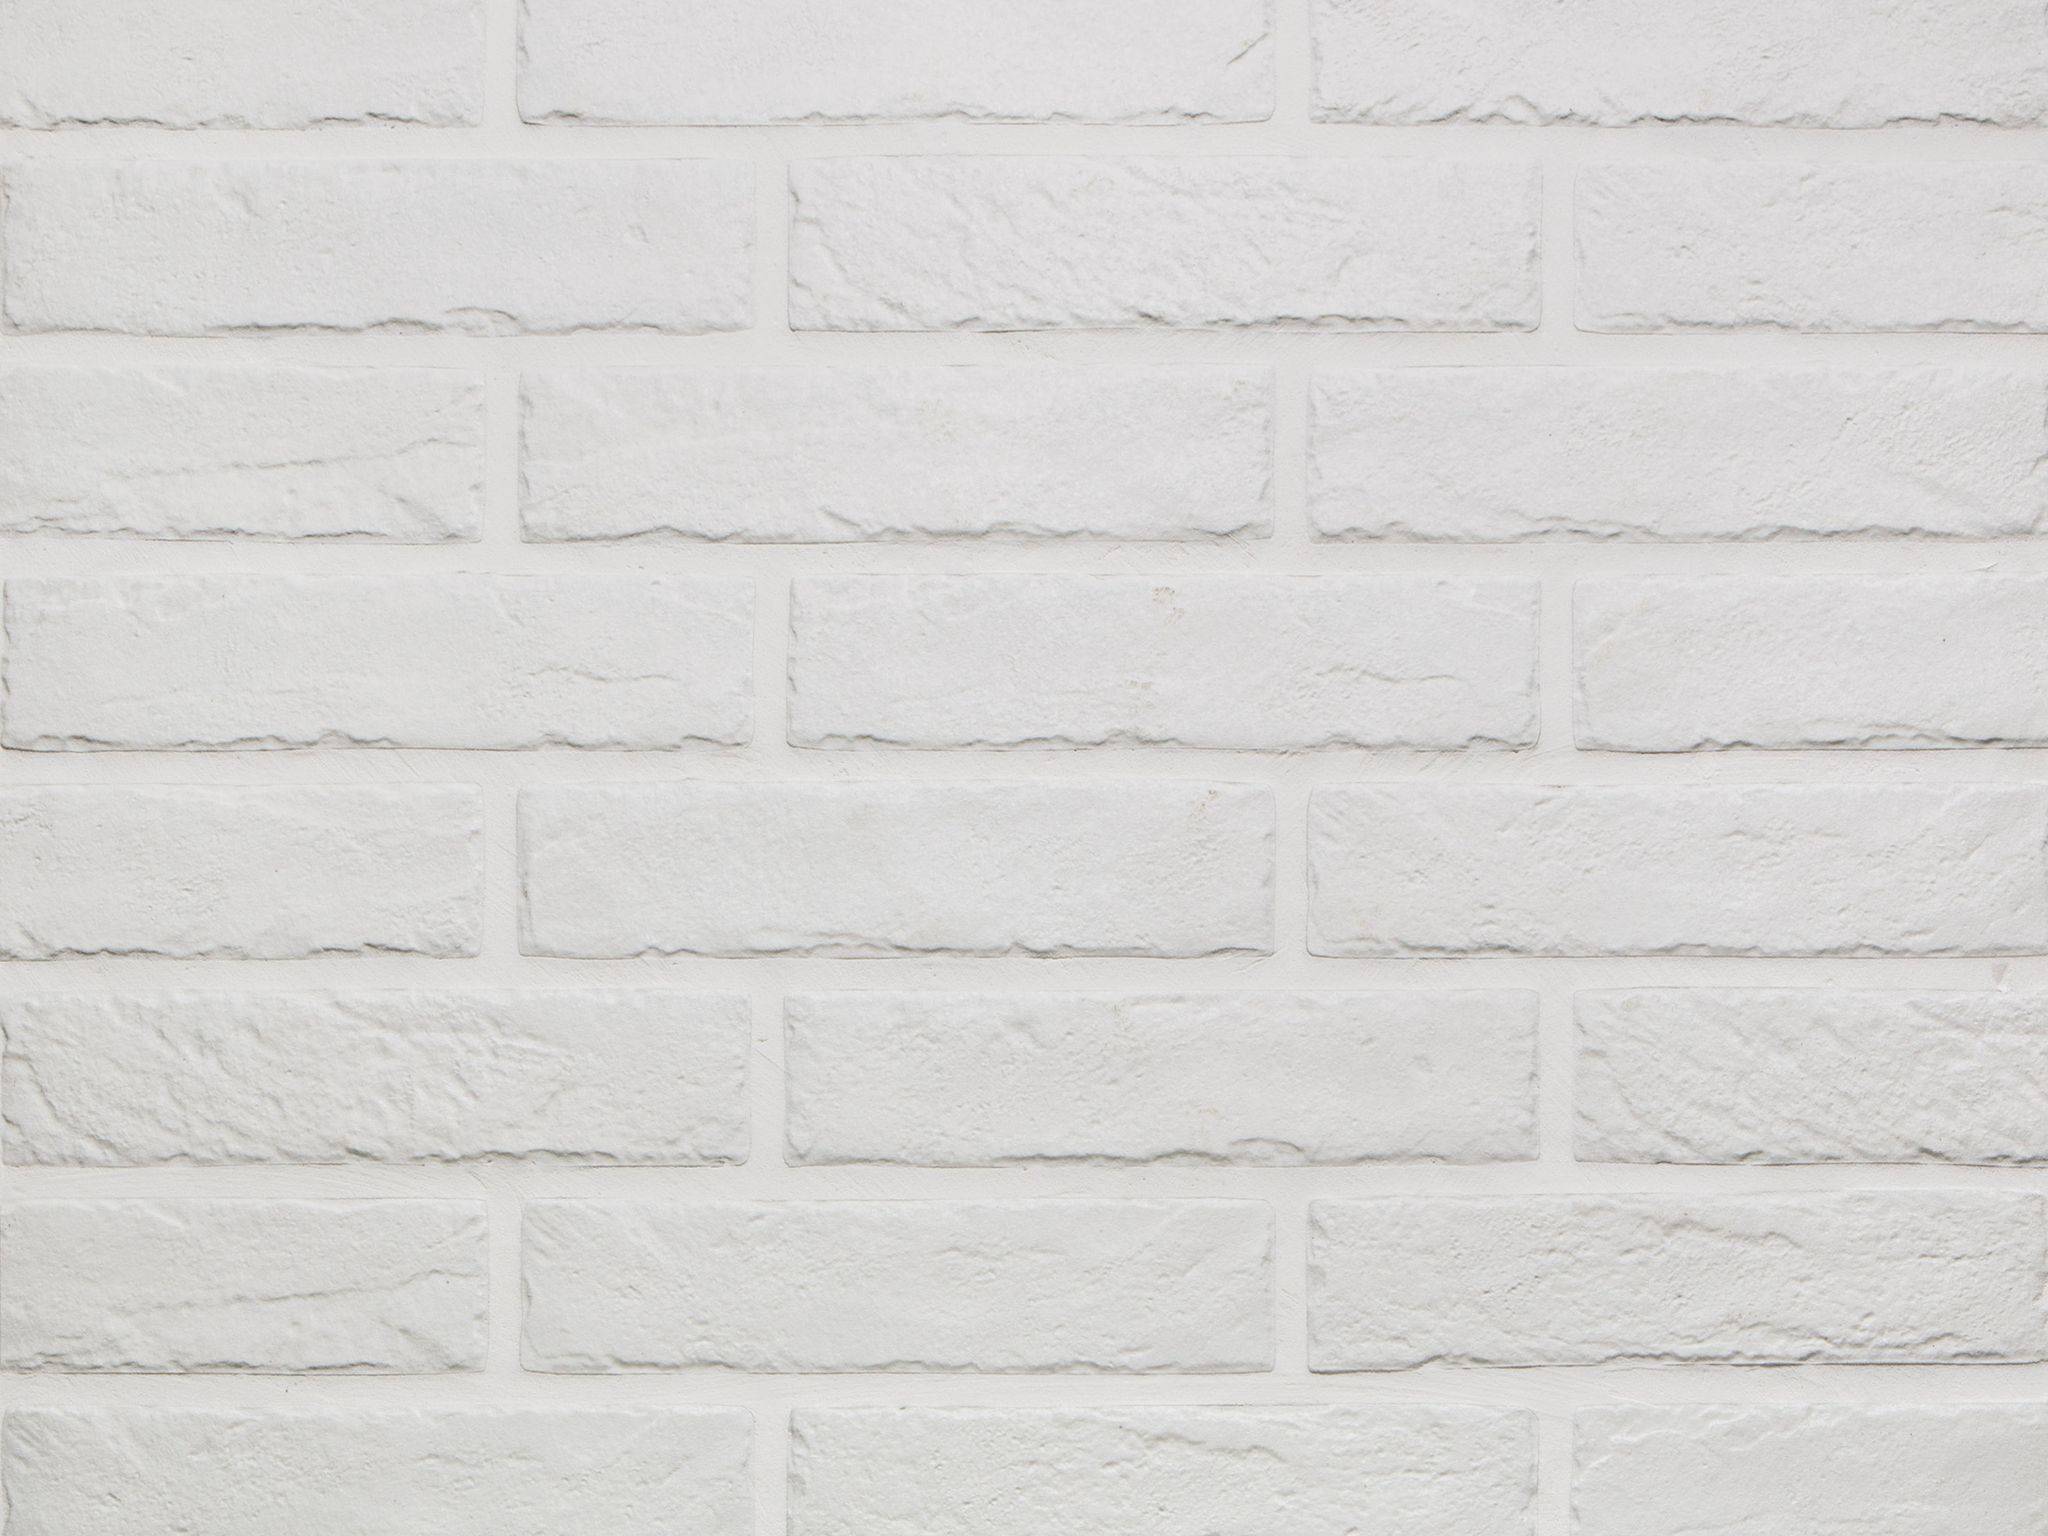 Brix 2x10 White 1 | Qualis Ceramica | Luxury Tile and Vinyl at affordable prices